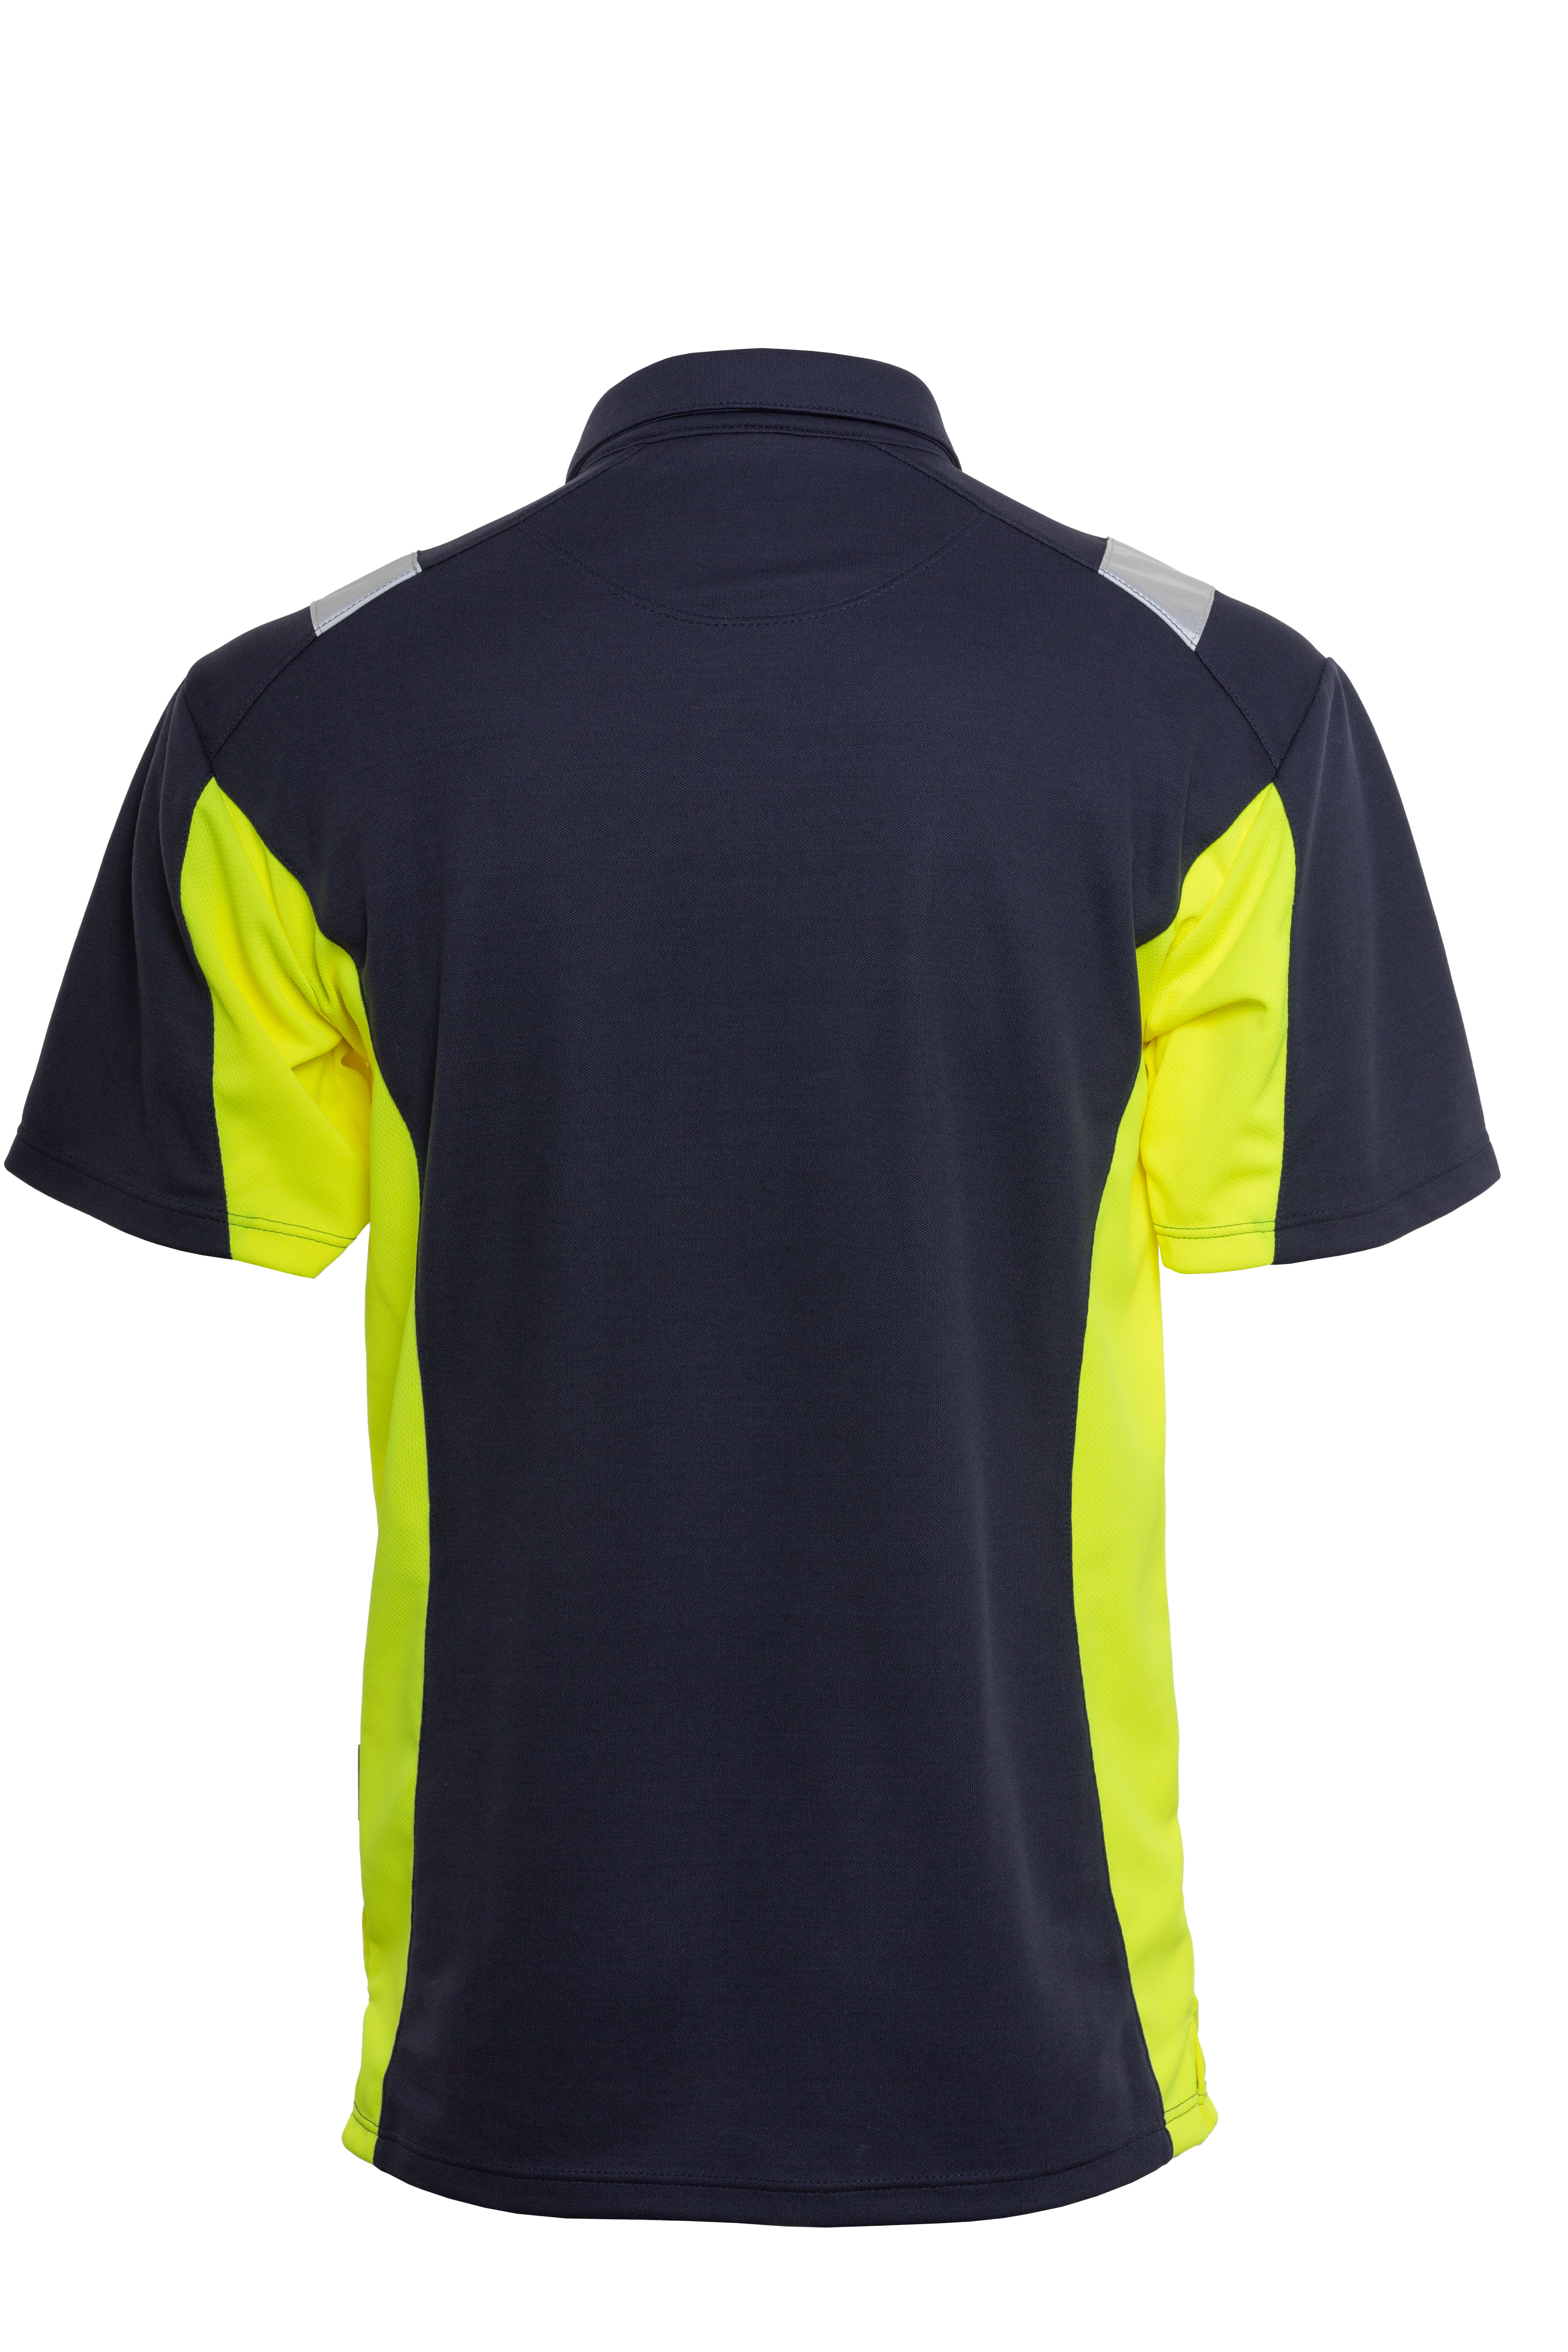 Rescuewear Poloshirt kurze Ärmel Dynamic Marineblau / Neon Gelb - 4XL